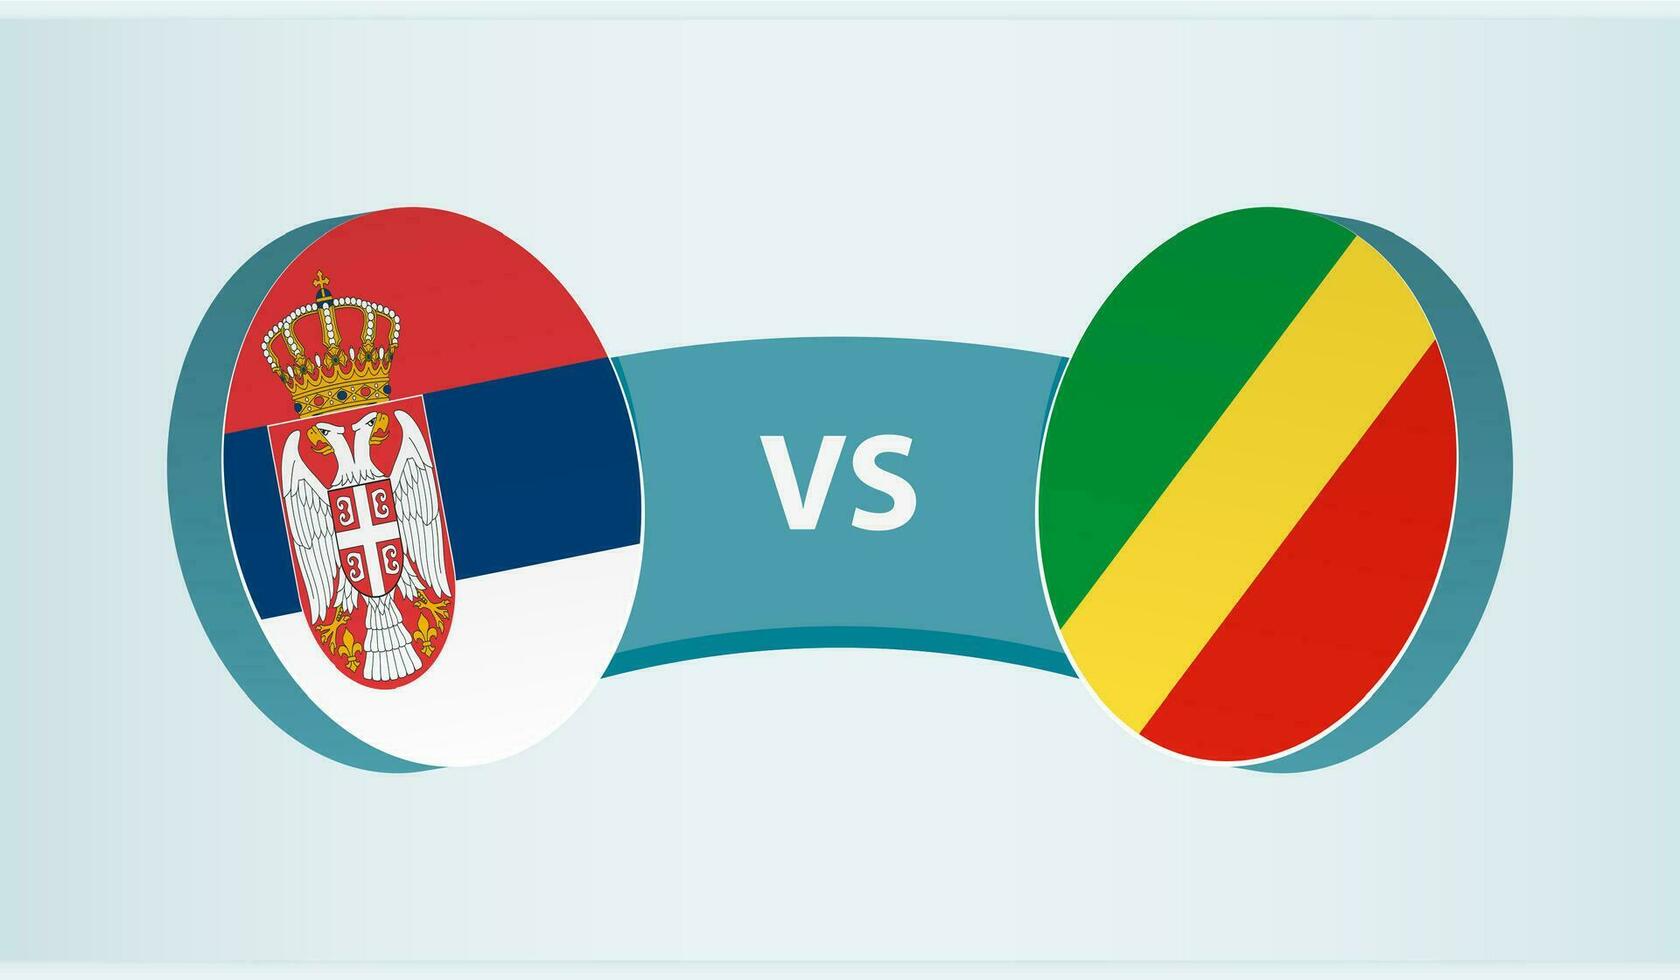 Serbia versus Congo, team sports competition concept. vector